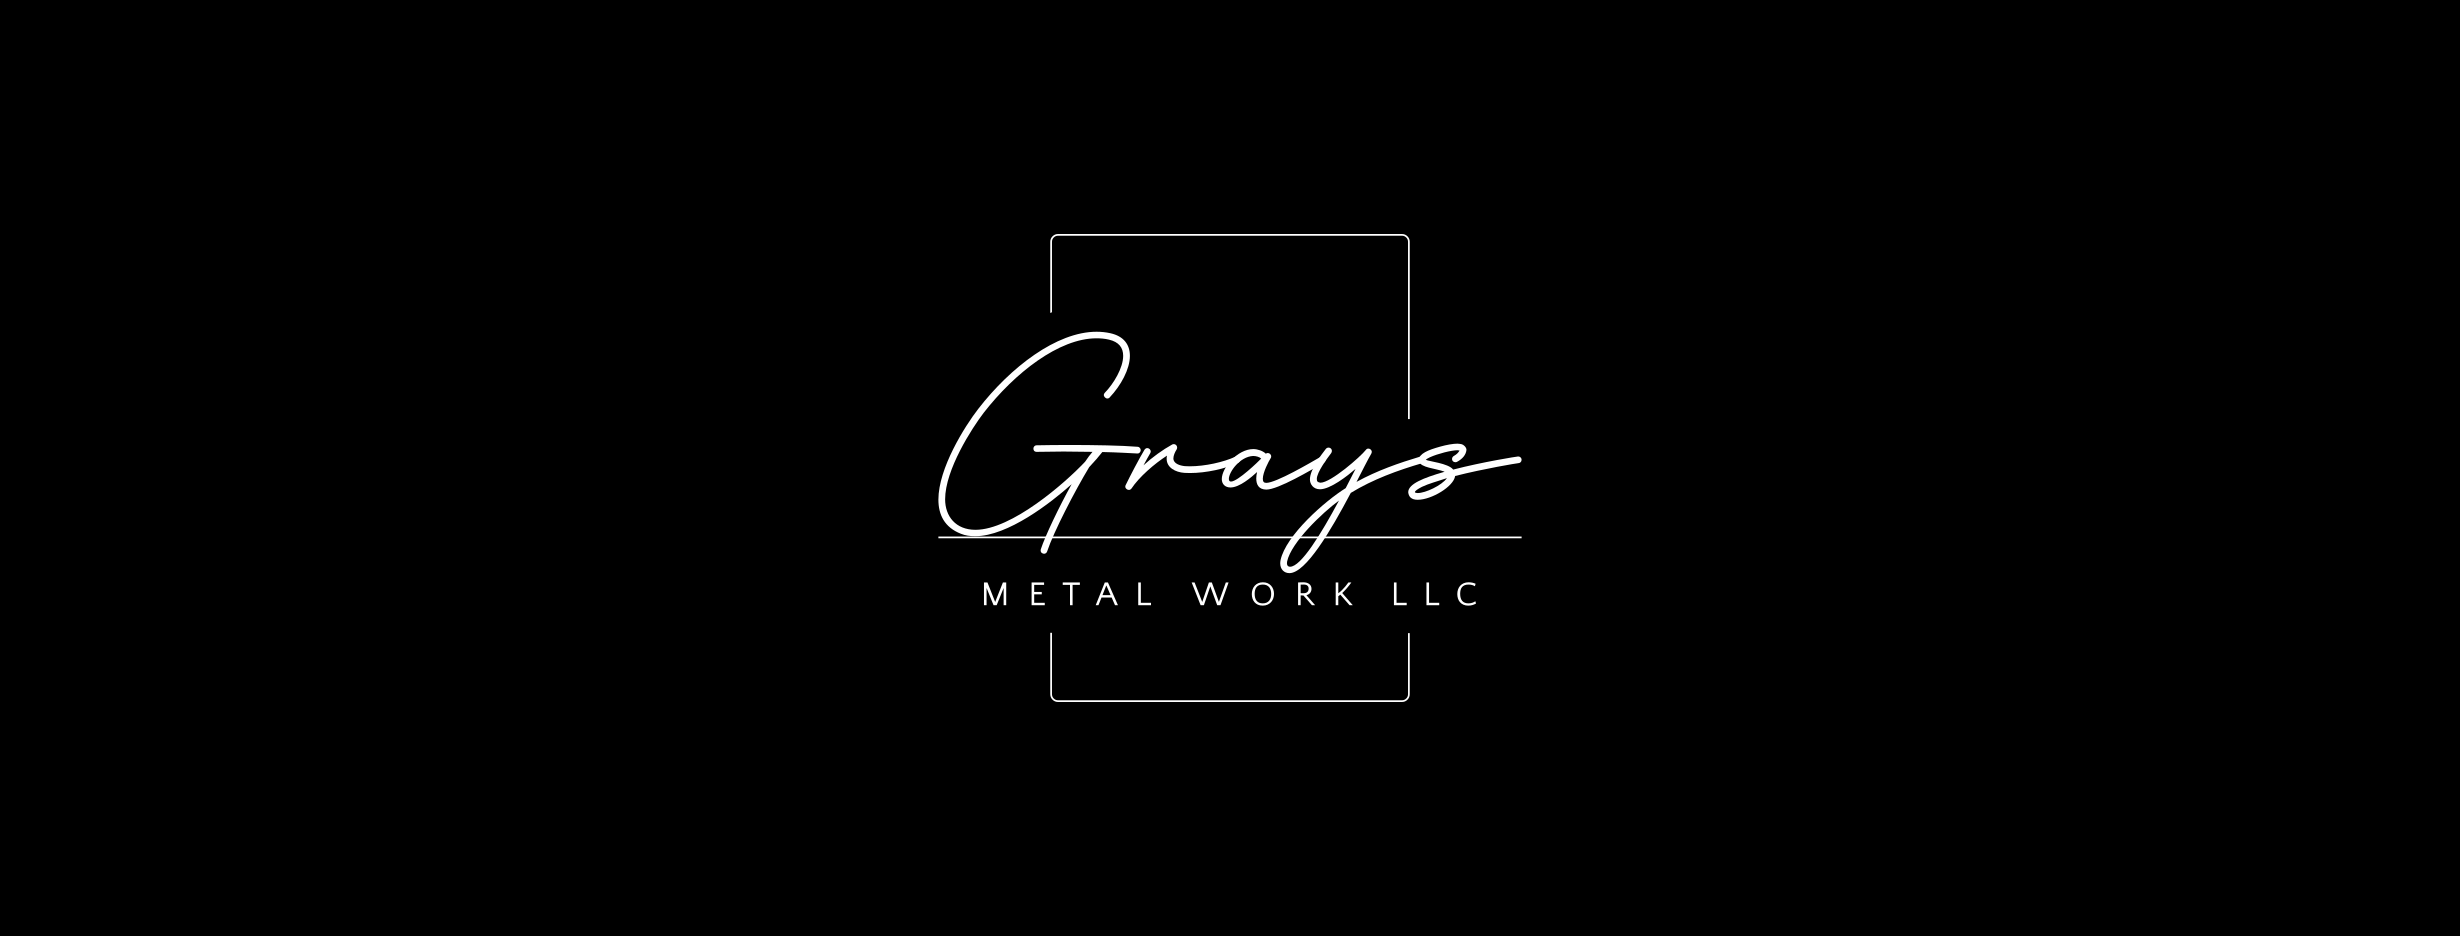 Grays Metalwork, LLC Logo